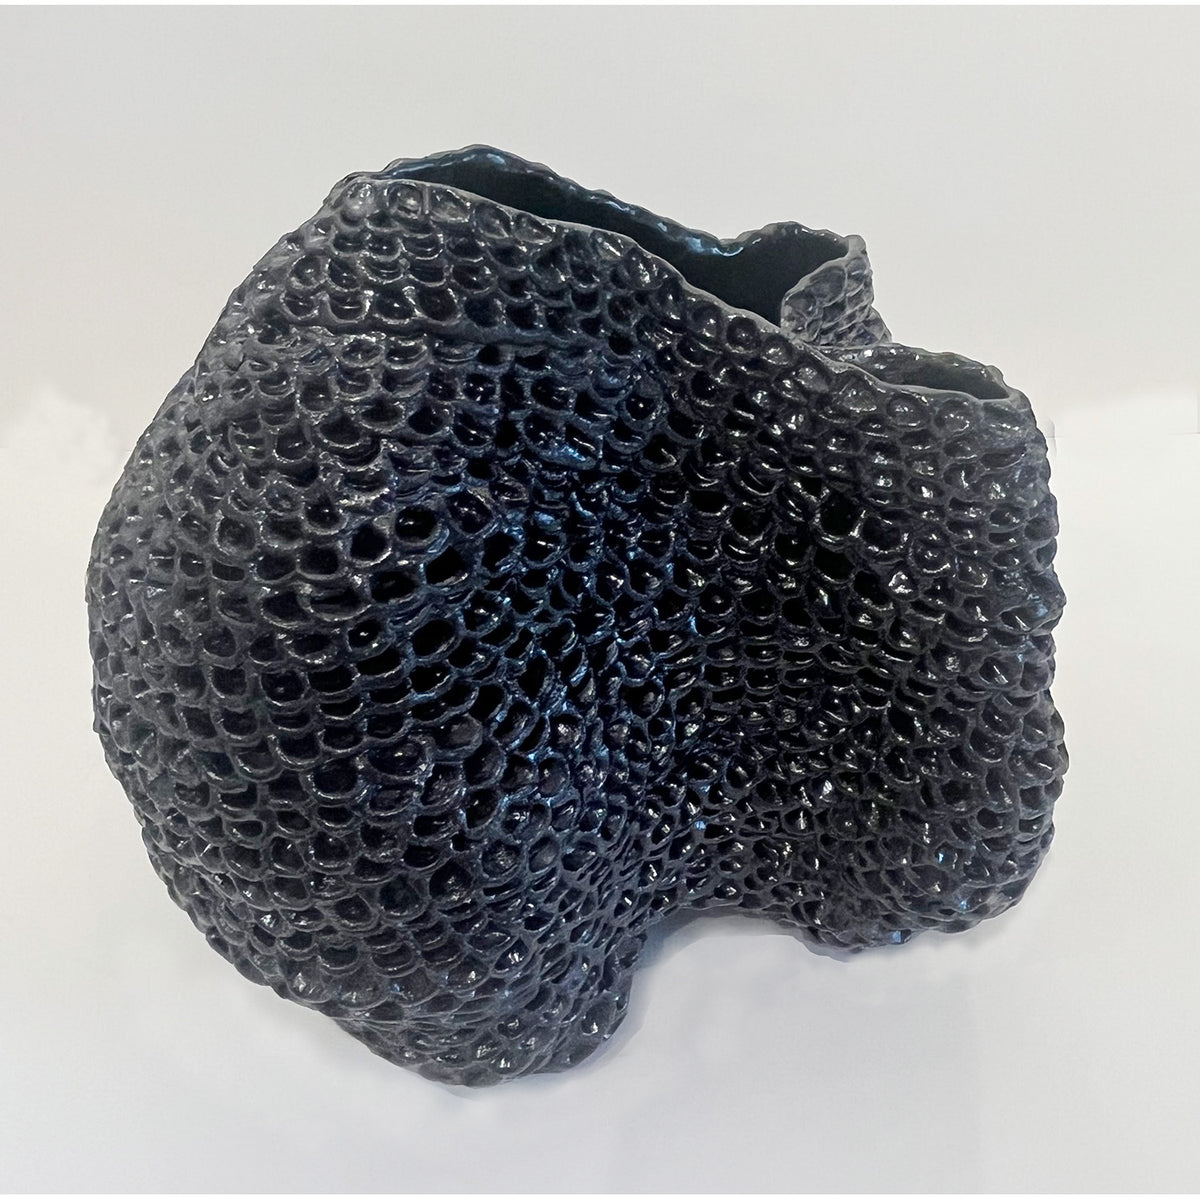 Small Black Coil Form 10"x9.5"x7.5"